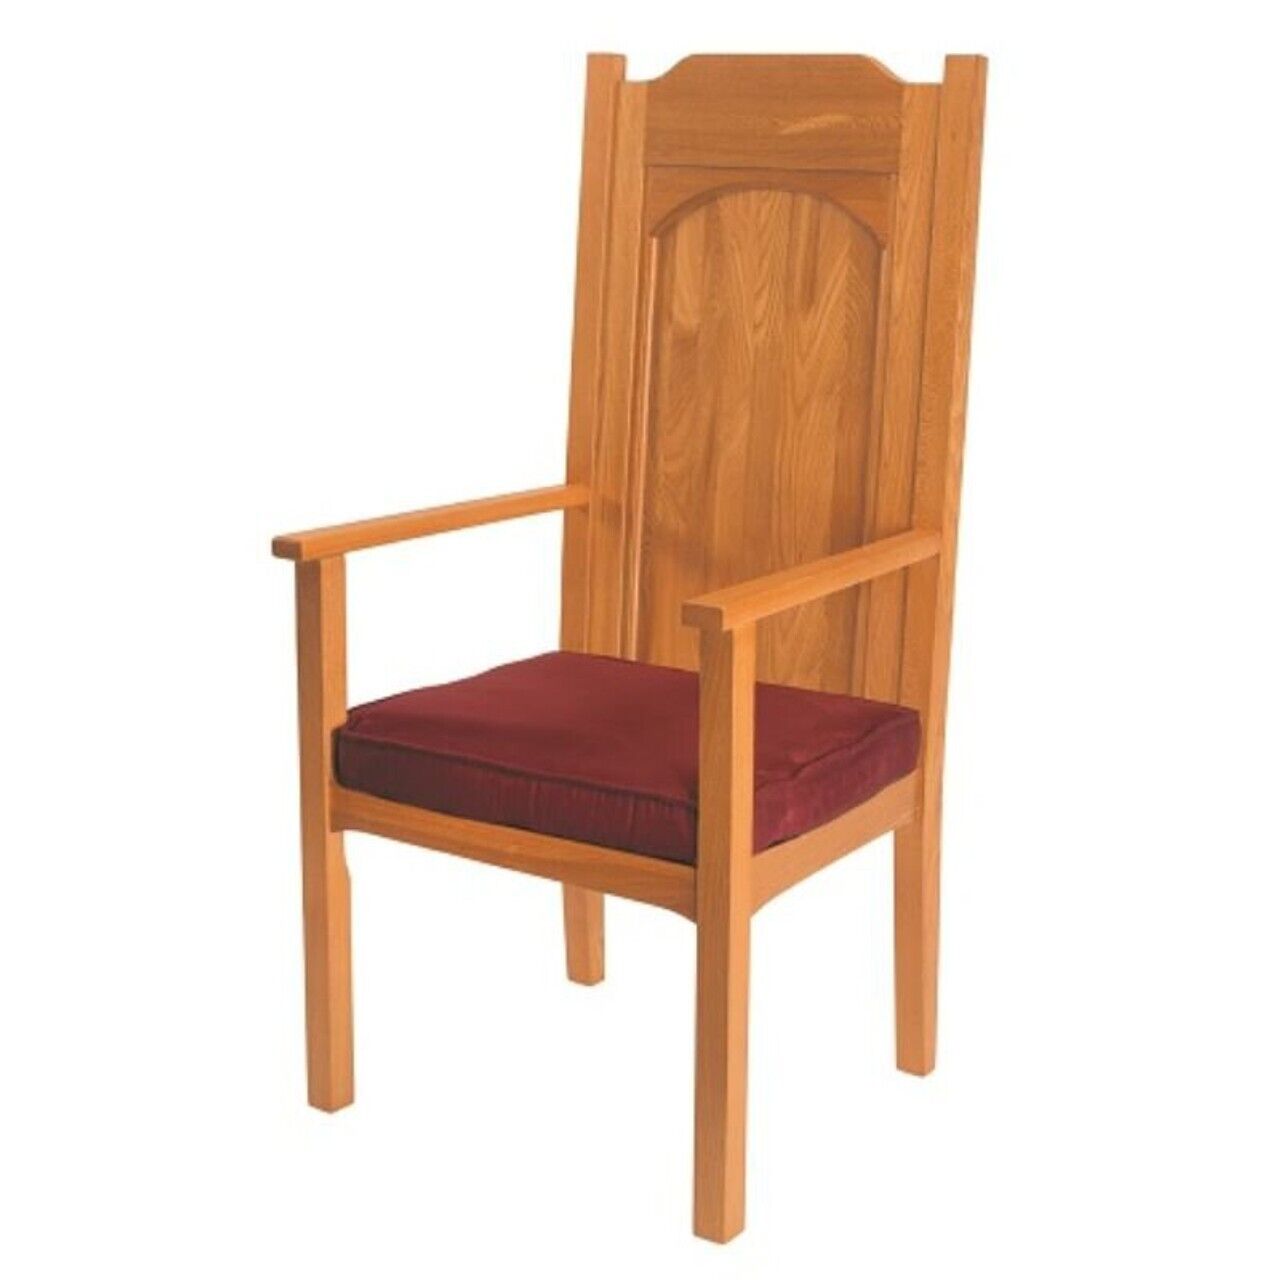 Medium Oak Stain Thomas More Maple Hardwood Celebrant Chair for Church Use 48 In